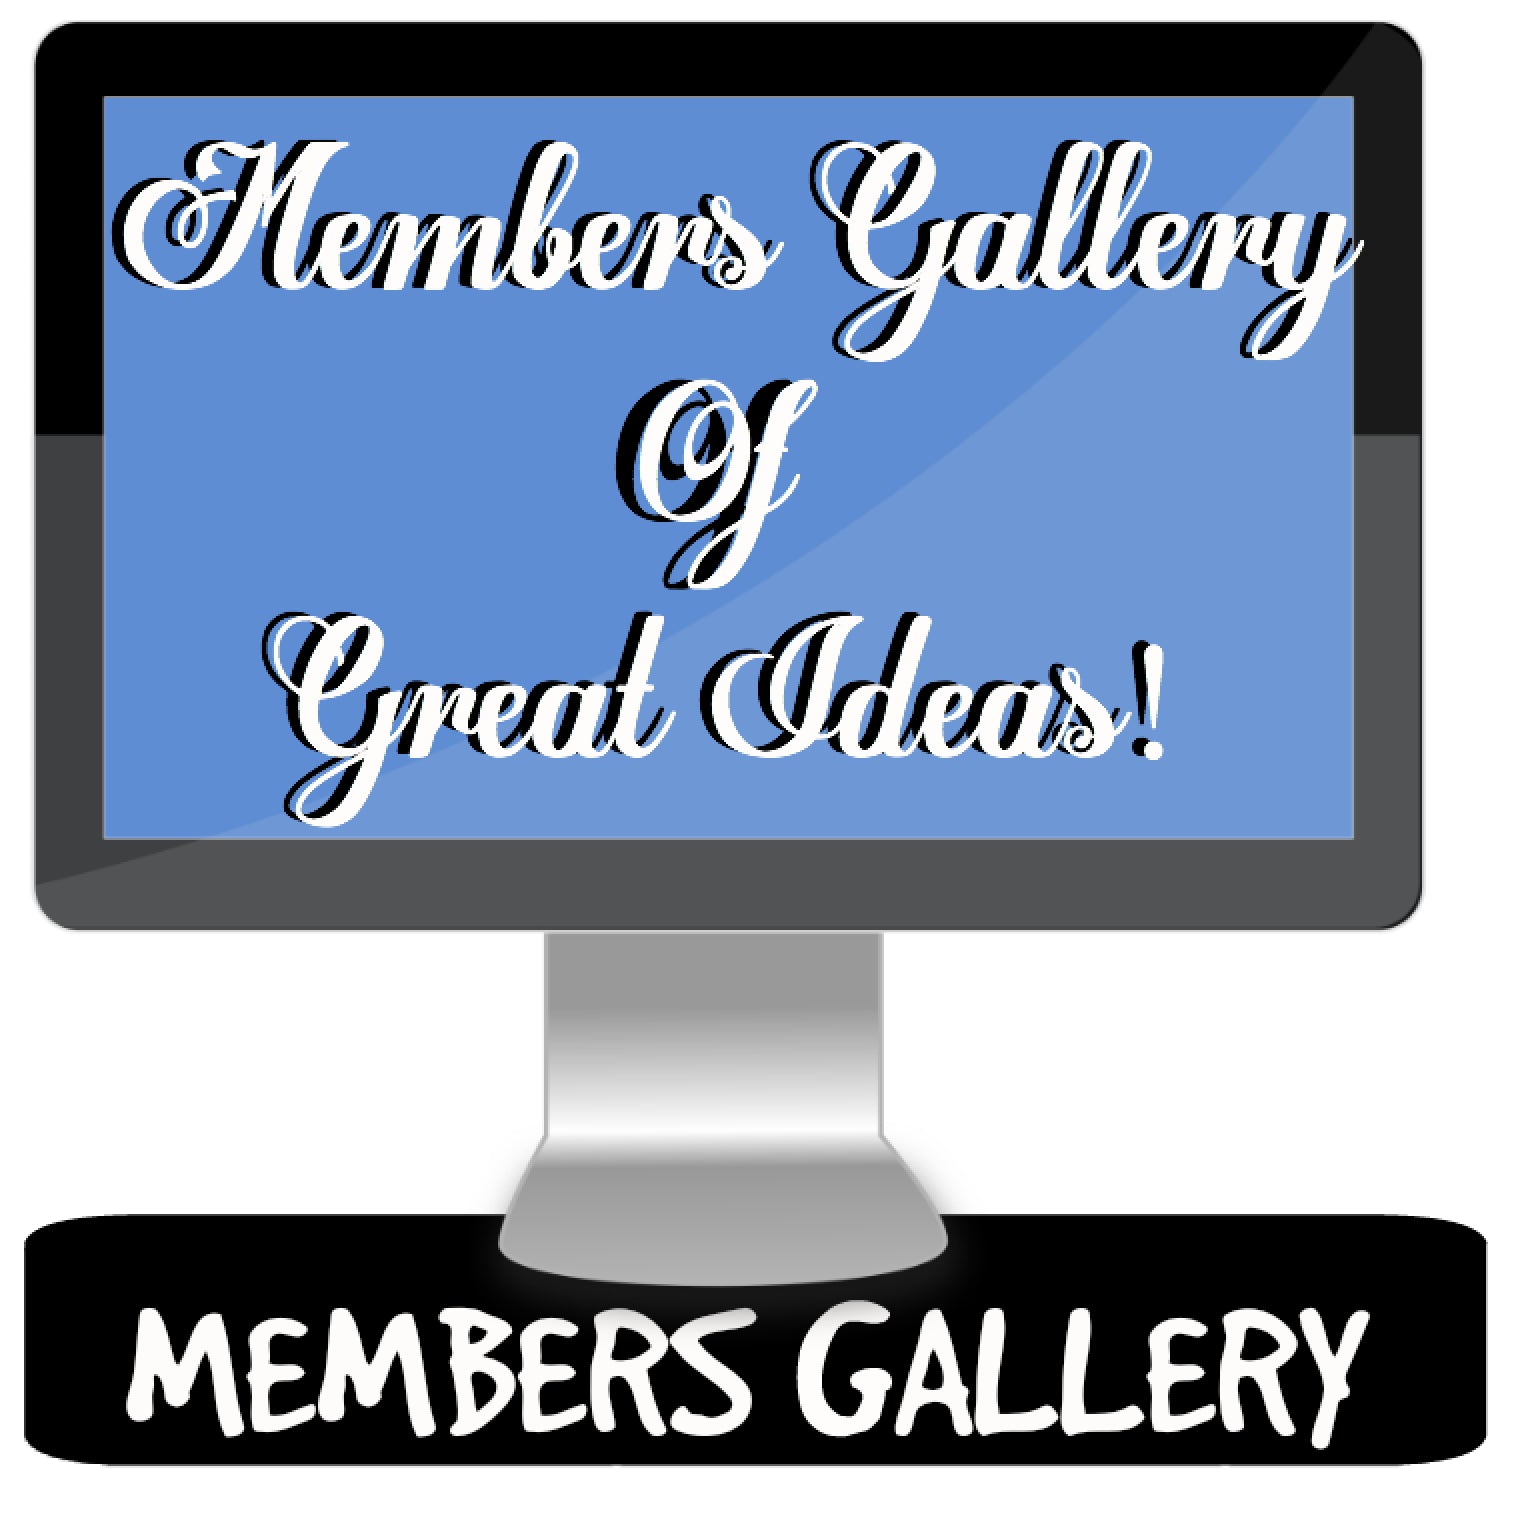 Members Gallery of Great Ideas